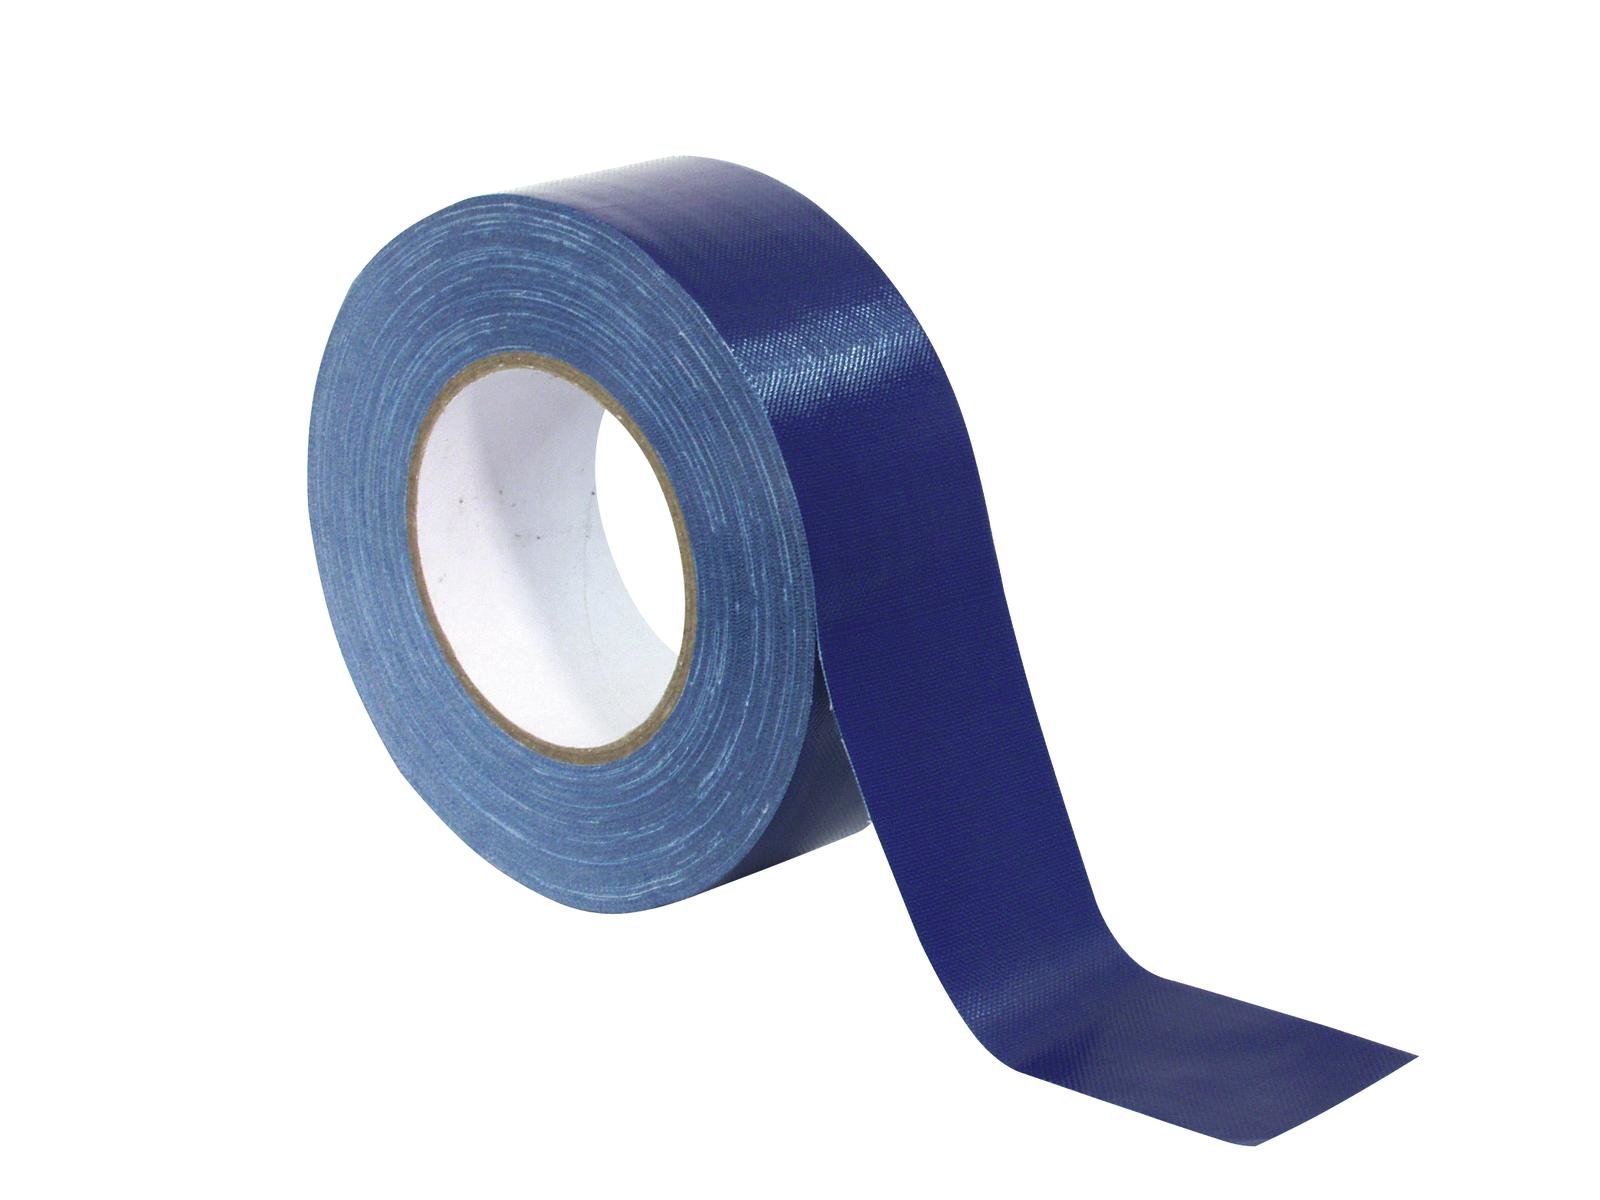 ACCESSORY Gaffa Tape Pro 50mm x 50m blau